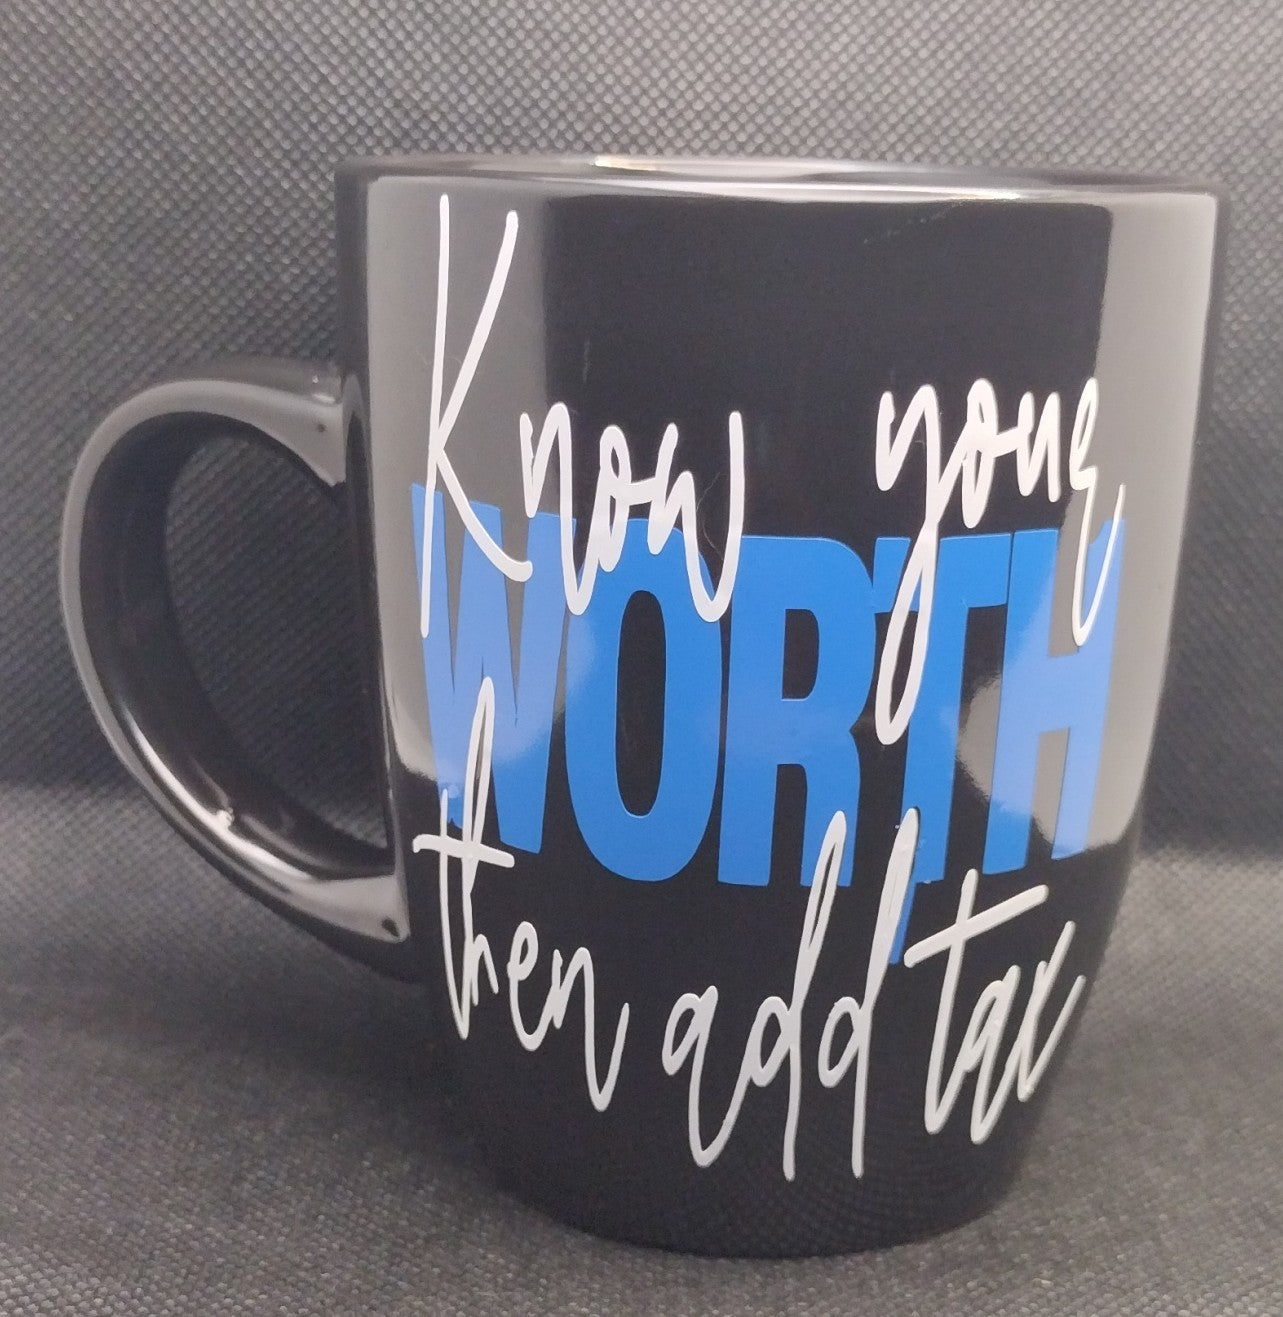 Know Your Worth and Add Tax Ceramic Mug